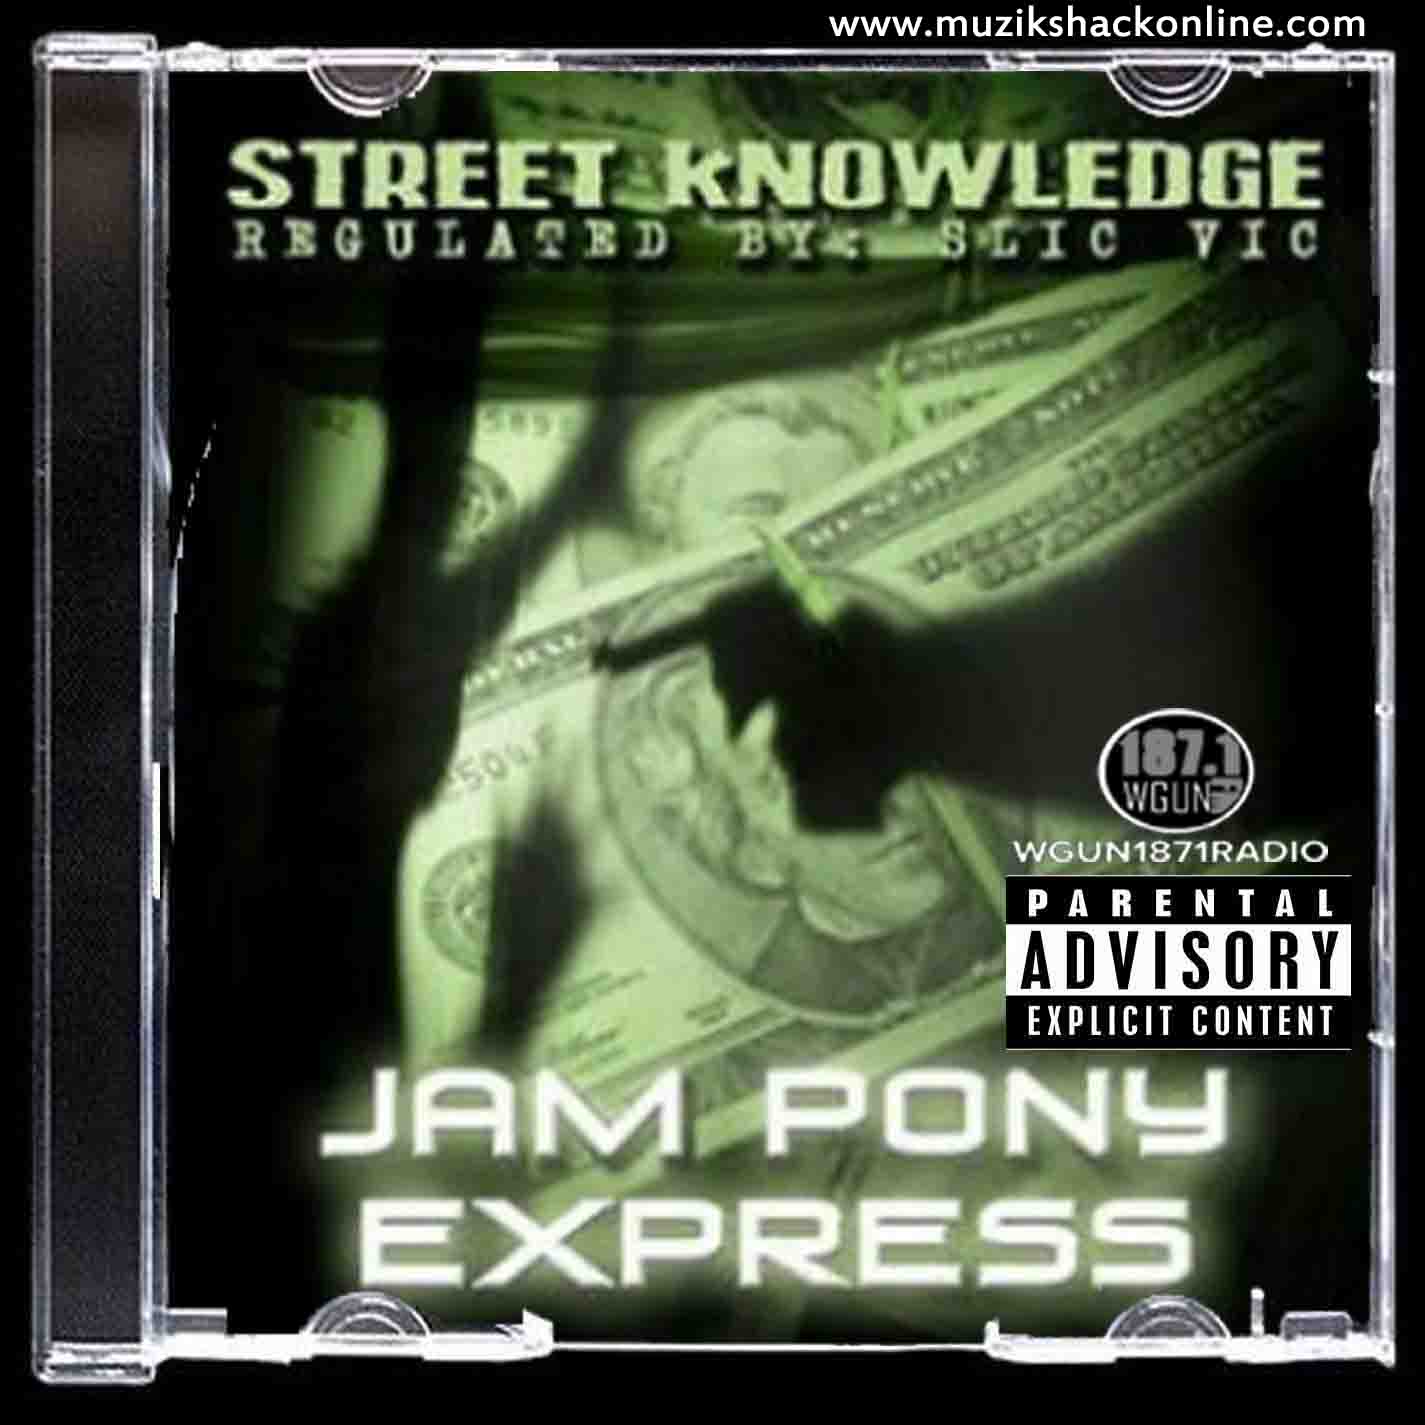 SLIC VIC JAM PONY - STREET KNOWLEDGE (STUDIO COPY) c2005